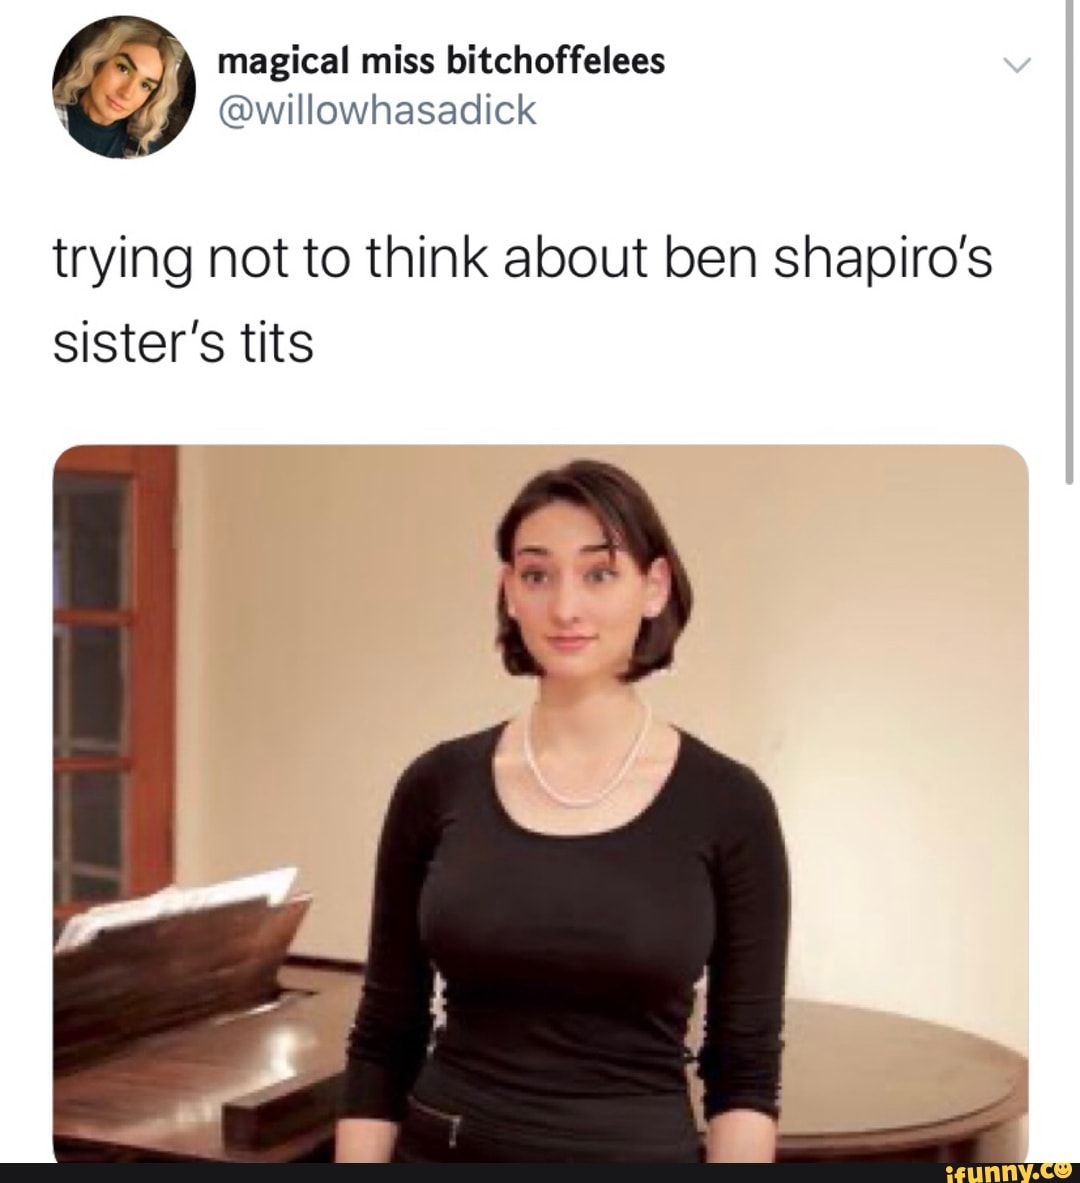 Ben shapiro's sisters tits